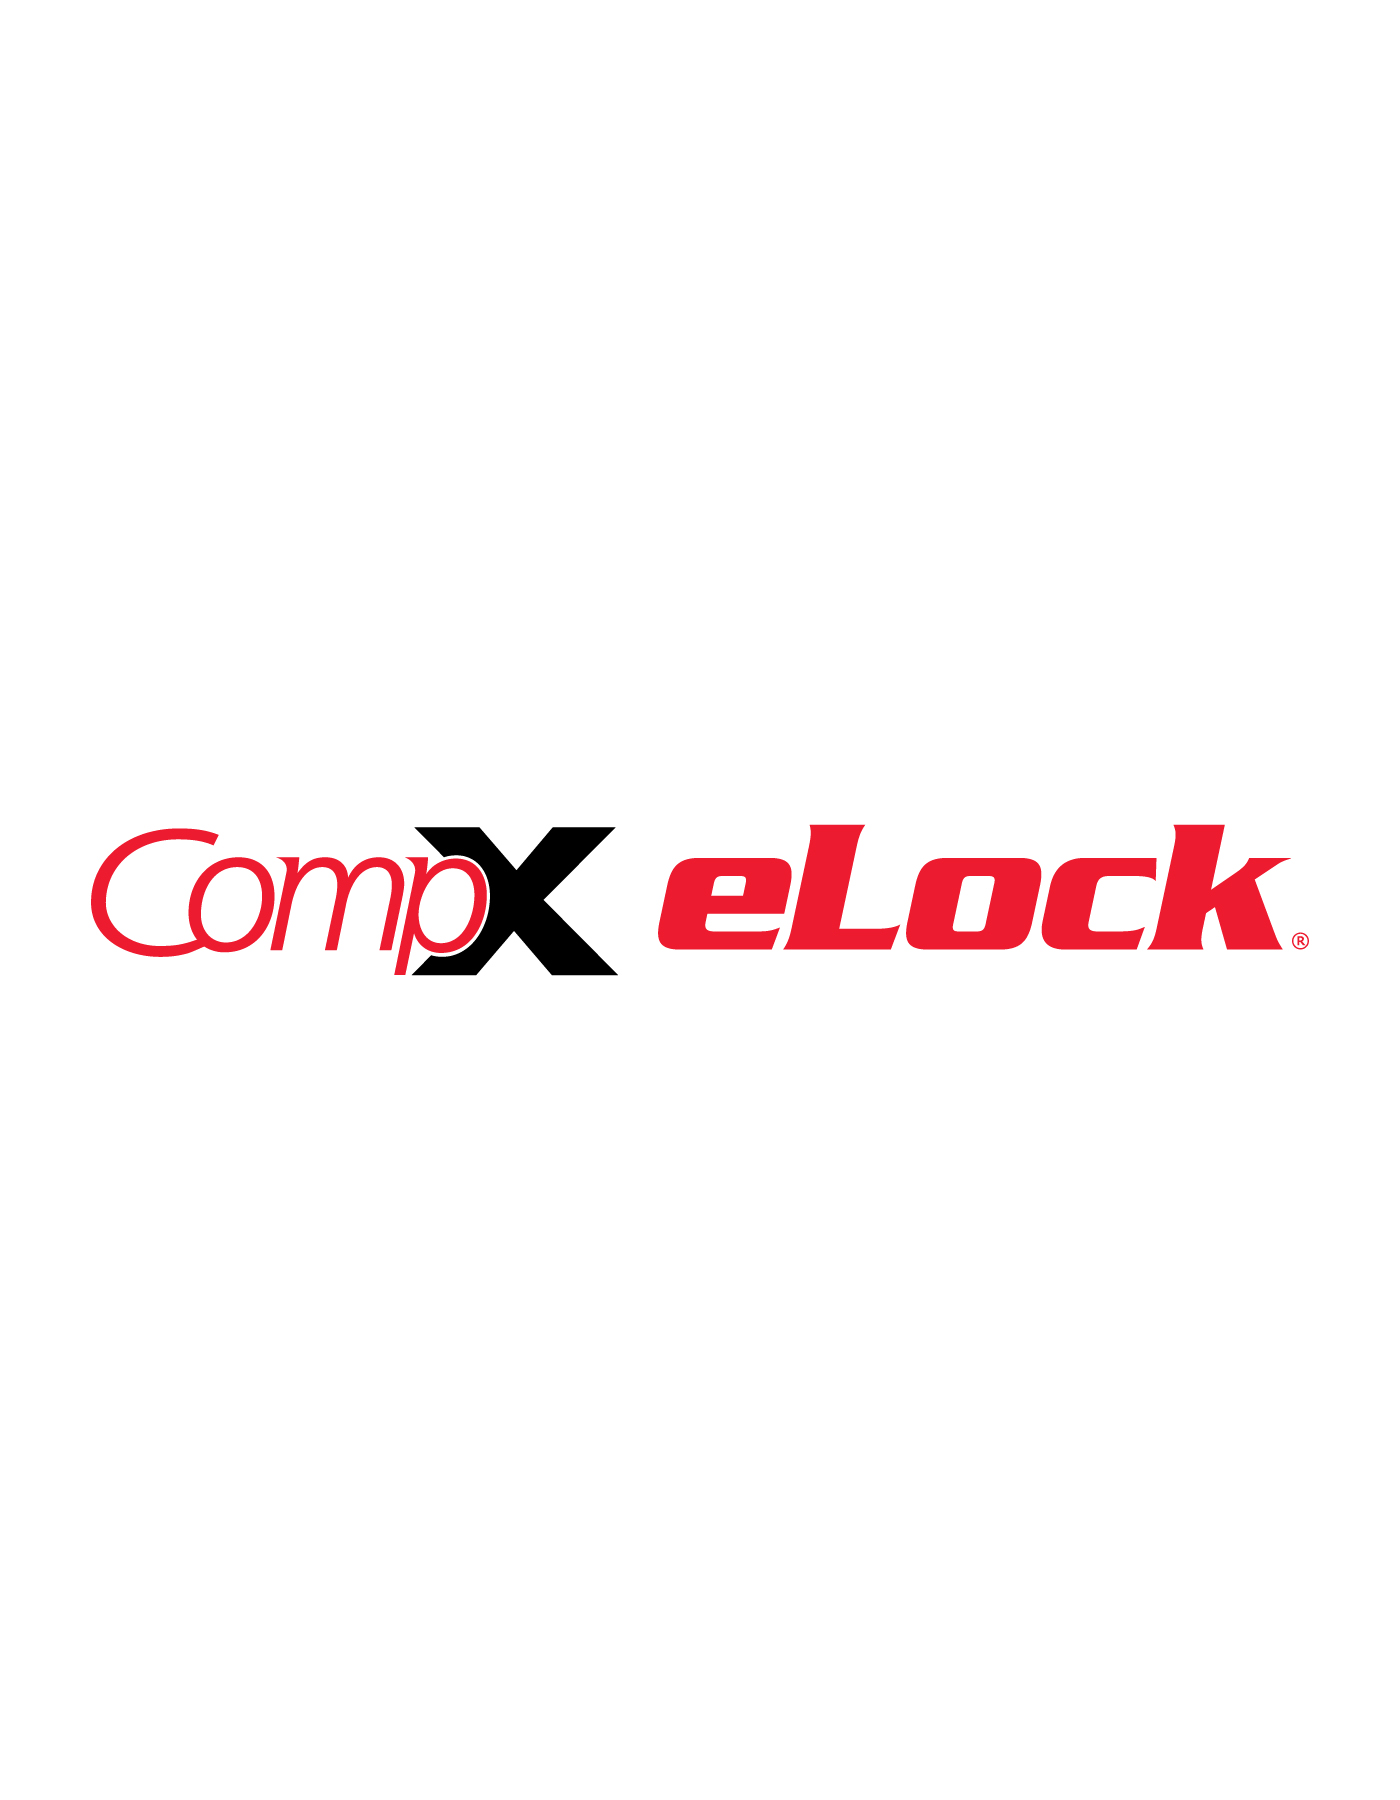 CompX eLock logo (vector) thumbnail image